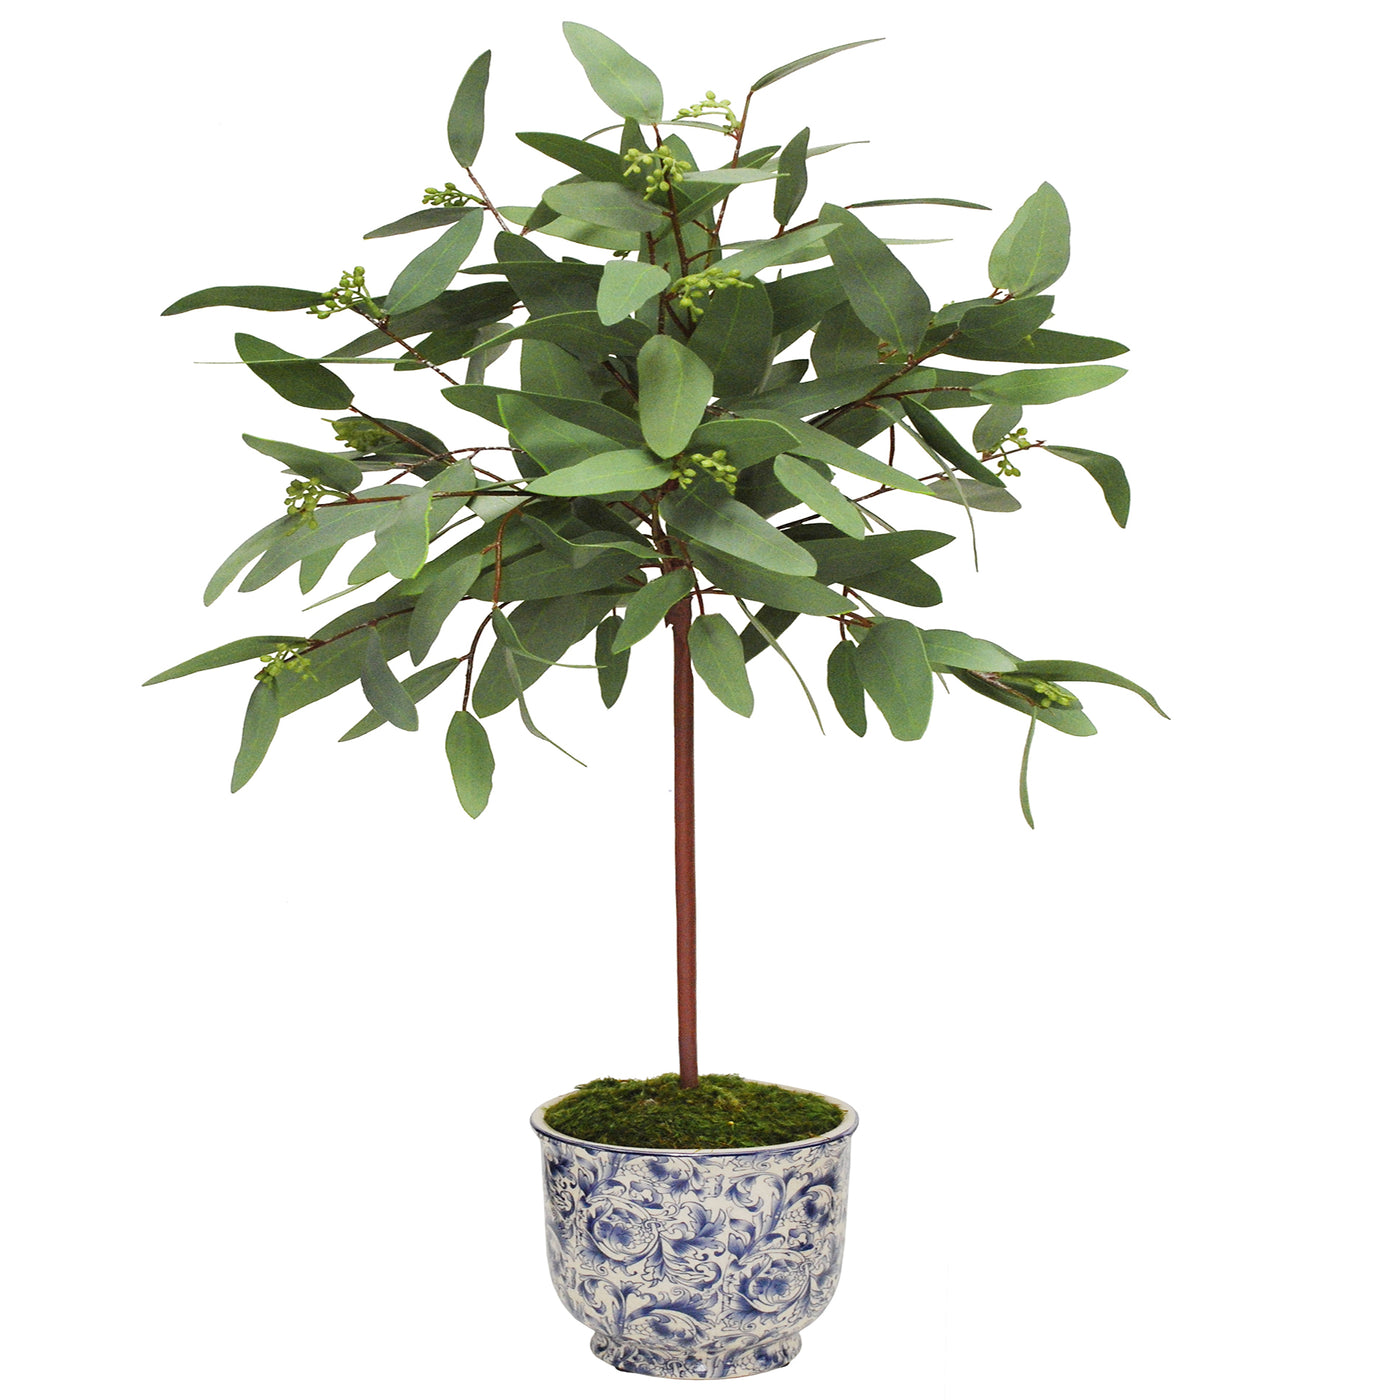 lush green single stem eucalyptus plant in classic white and blue ceramic pot